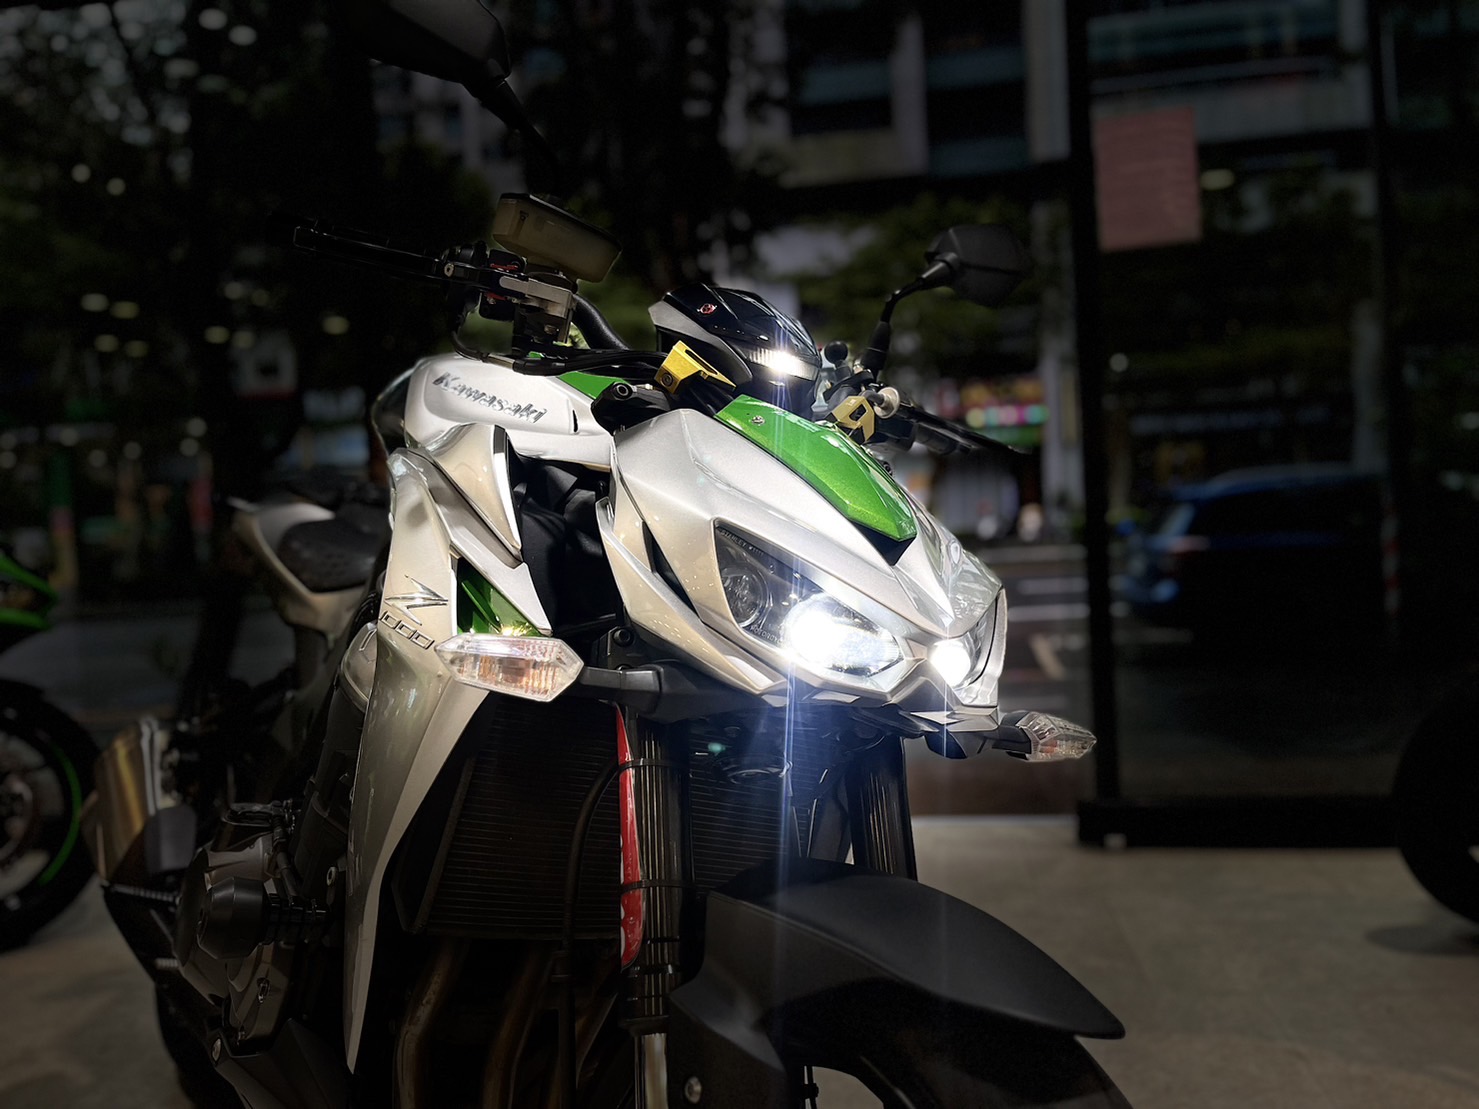 【小資族二手重機買賣】KAWASAKI Z1000 - 「Webike-摩托車市」 MK4 小資族二手重機買賣